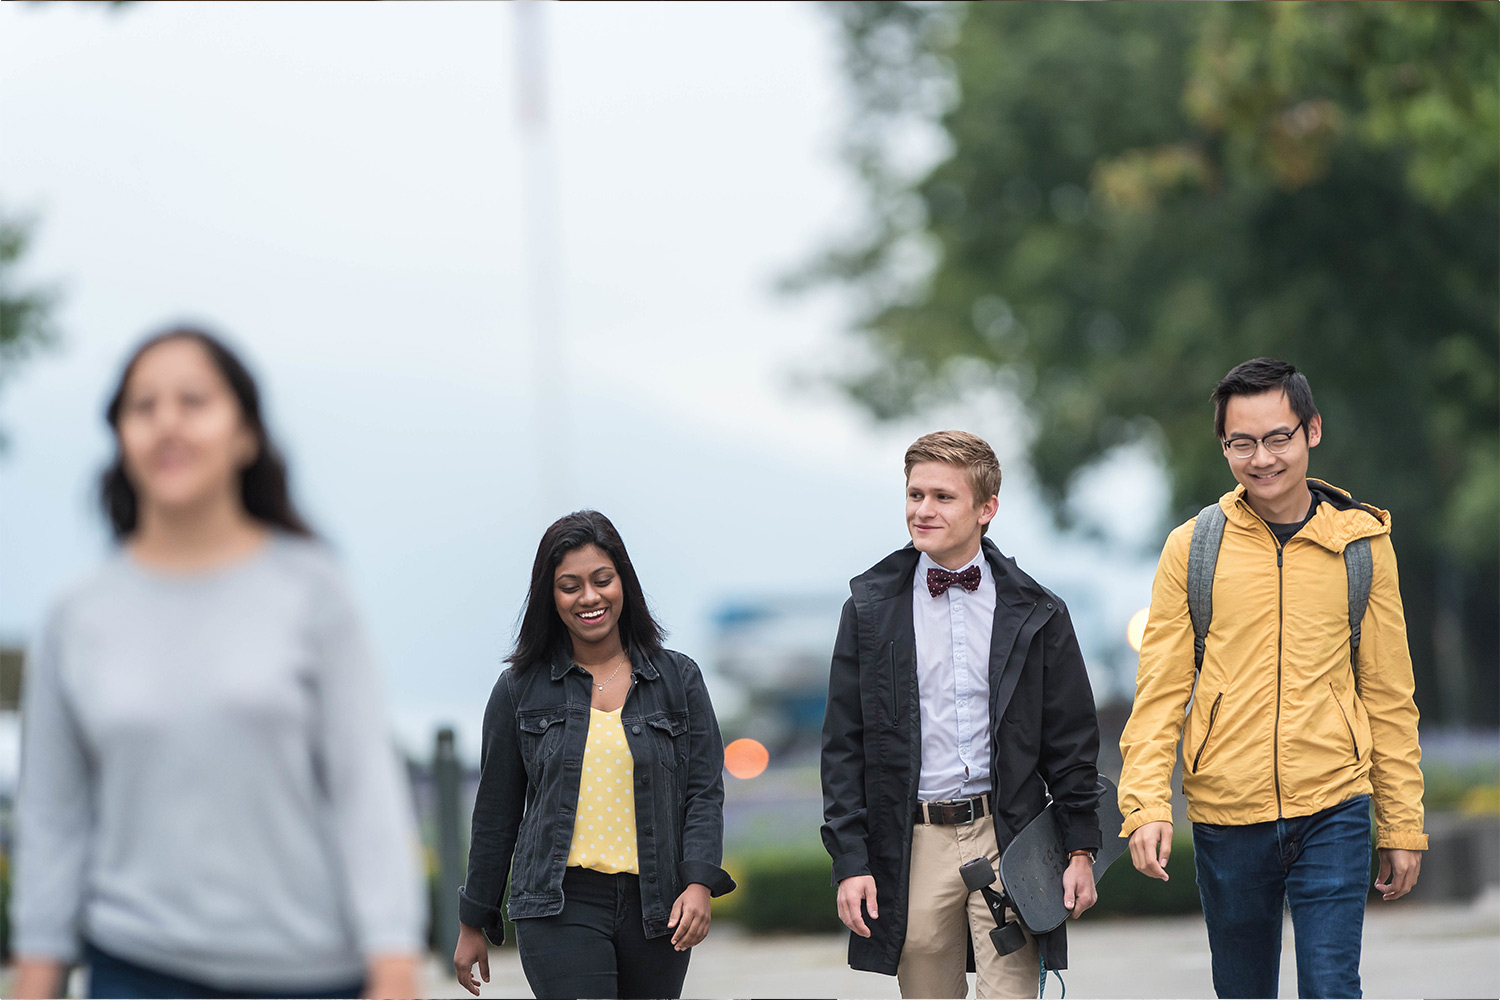 UBC students walking on campus